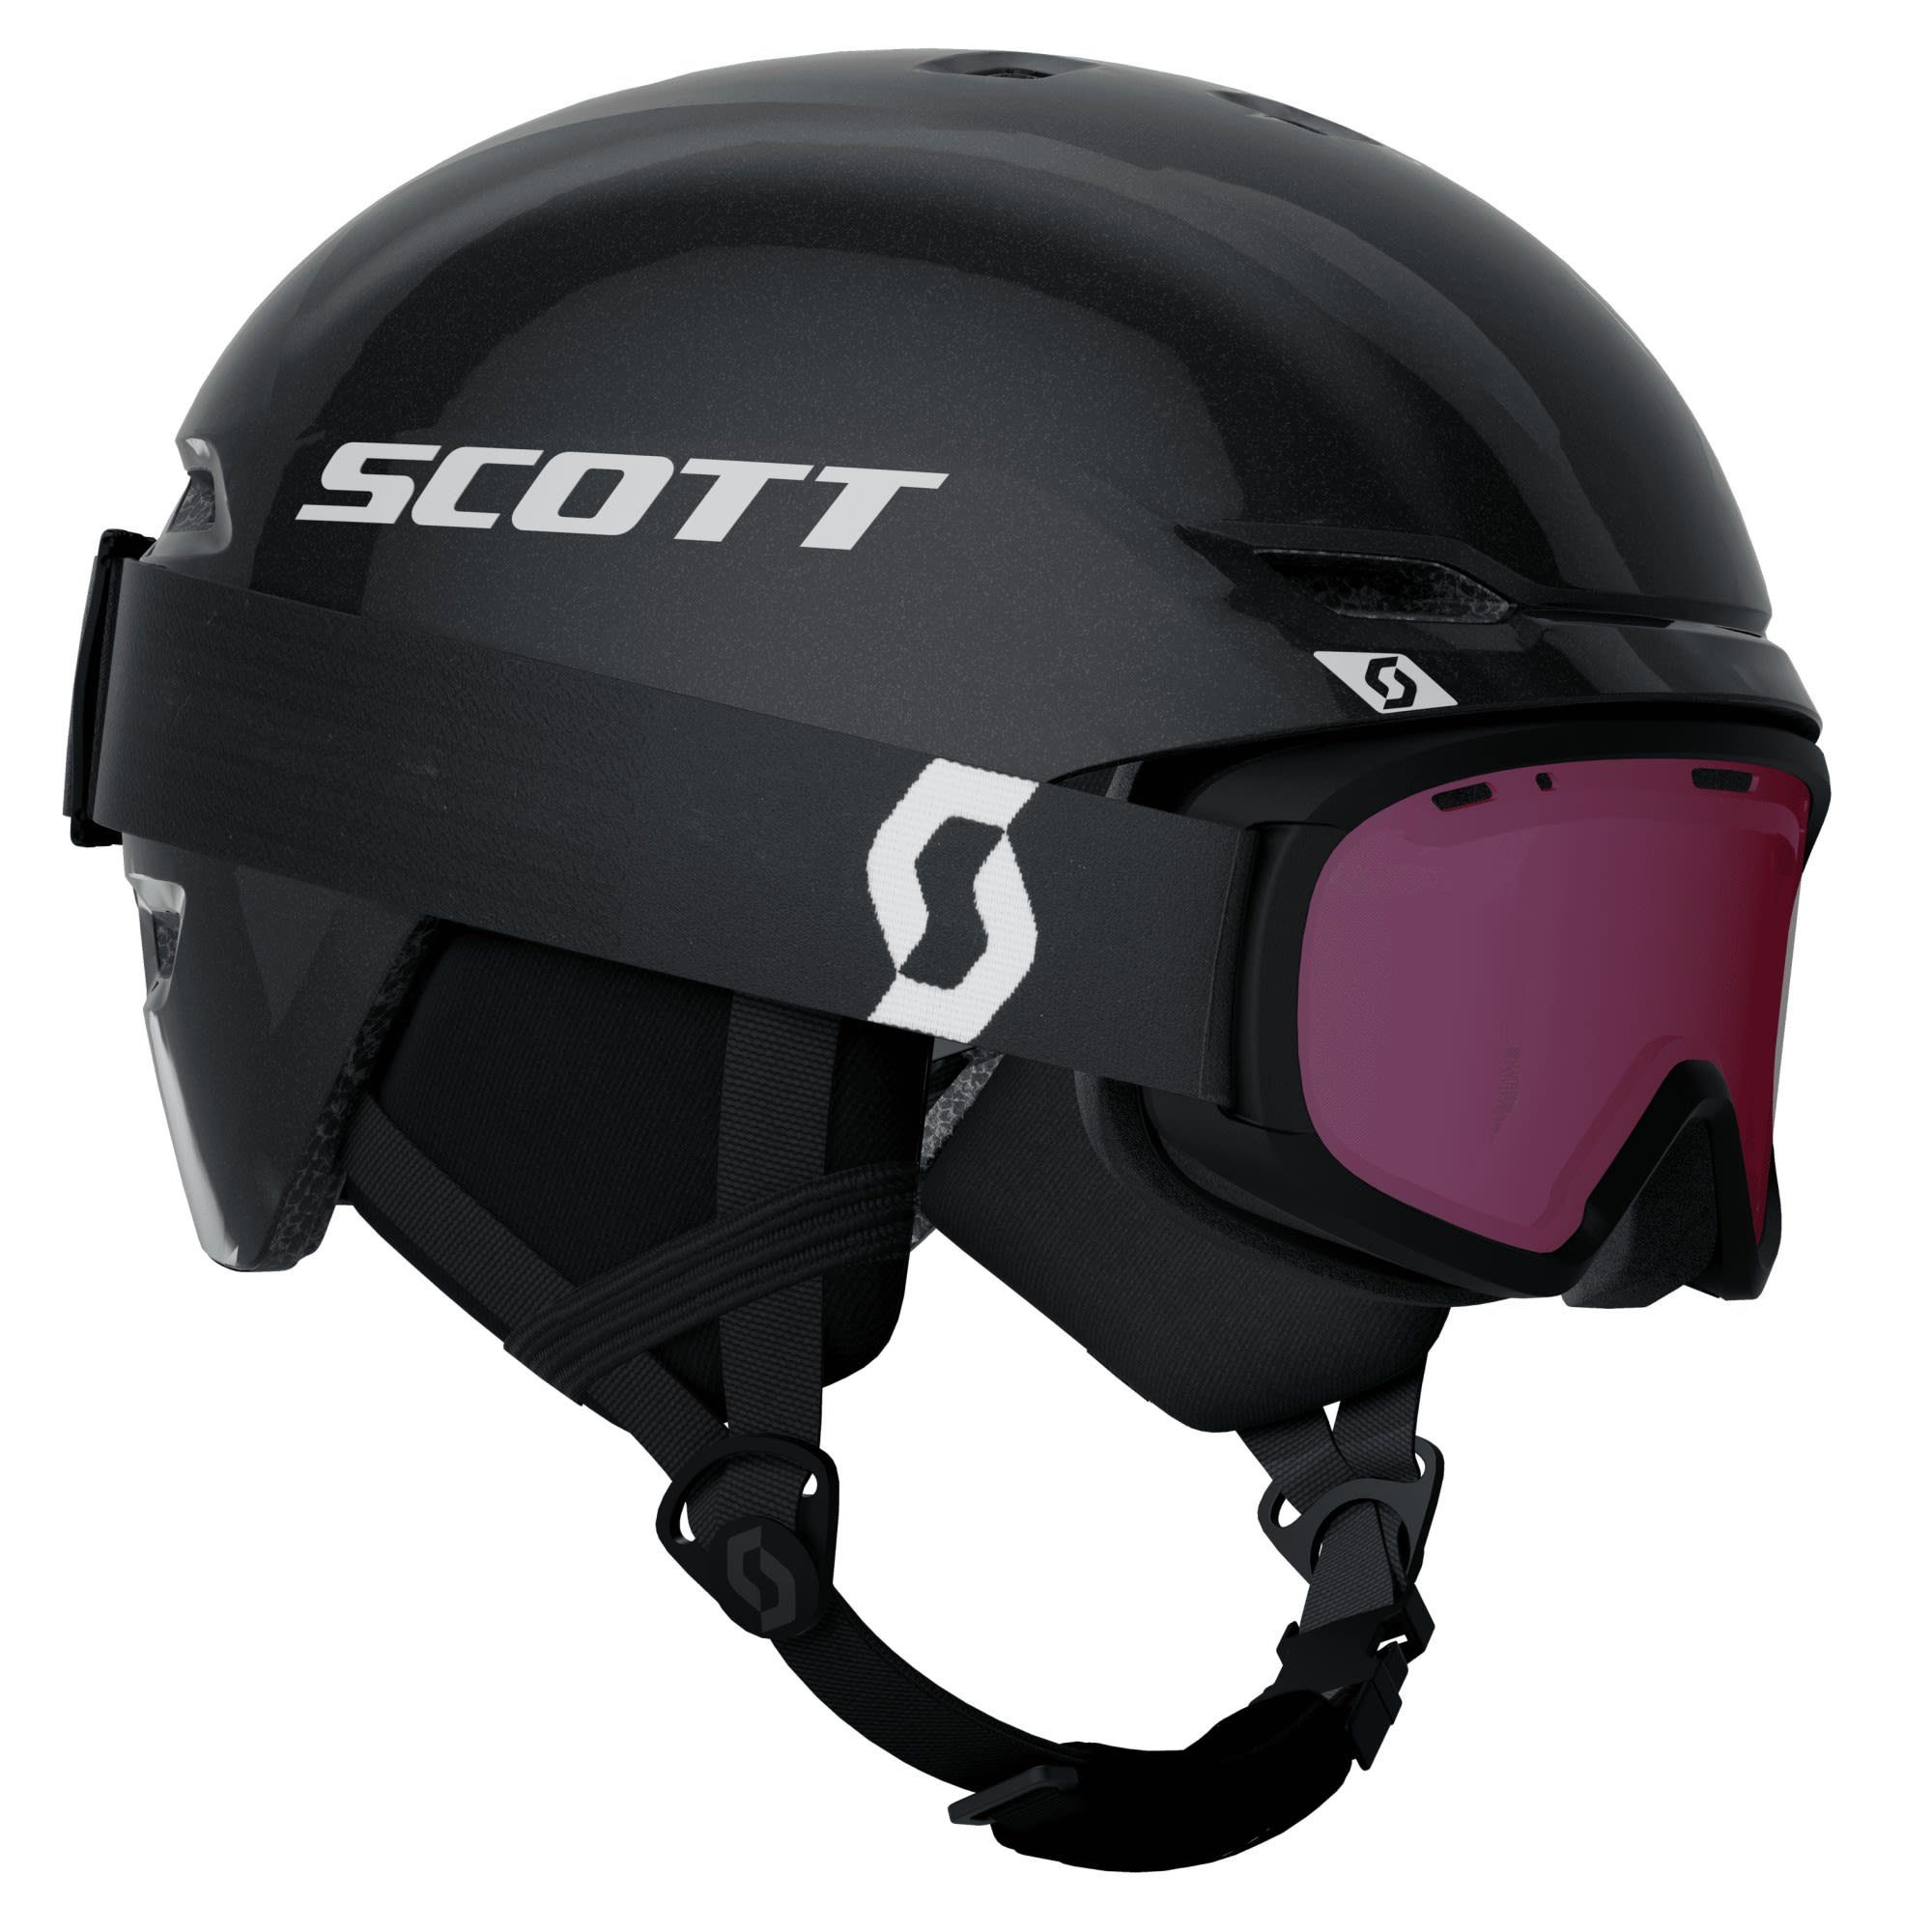 2 + Scott Goggle Skibrille - Black Scott Combo Witty Helmet Keeper White Mineral Junior